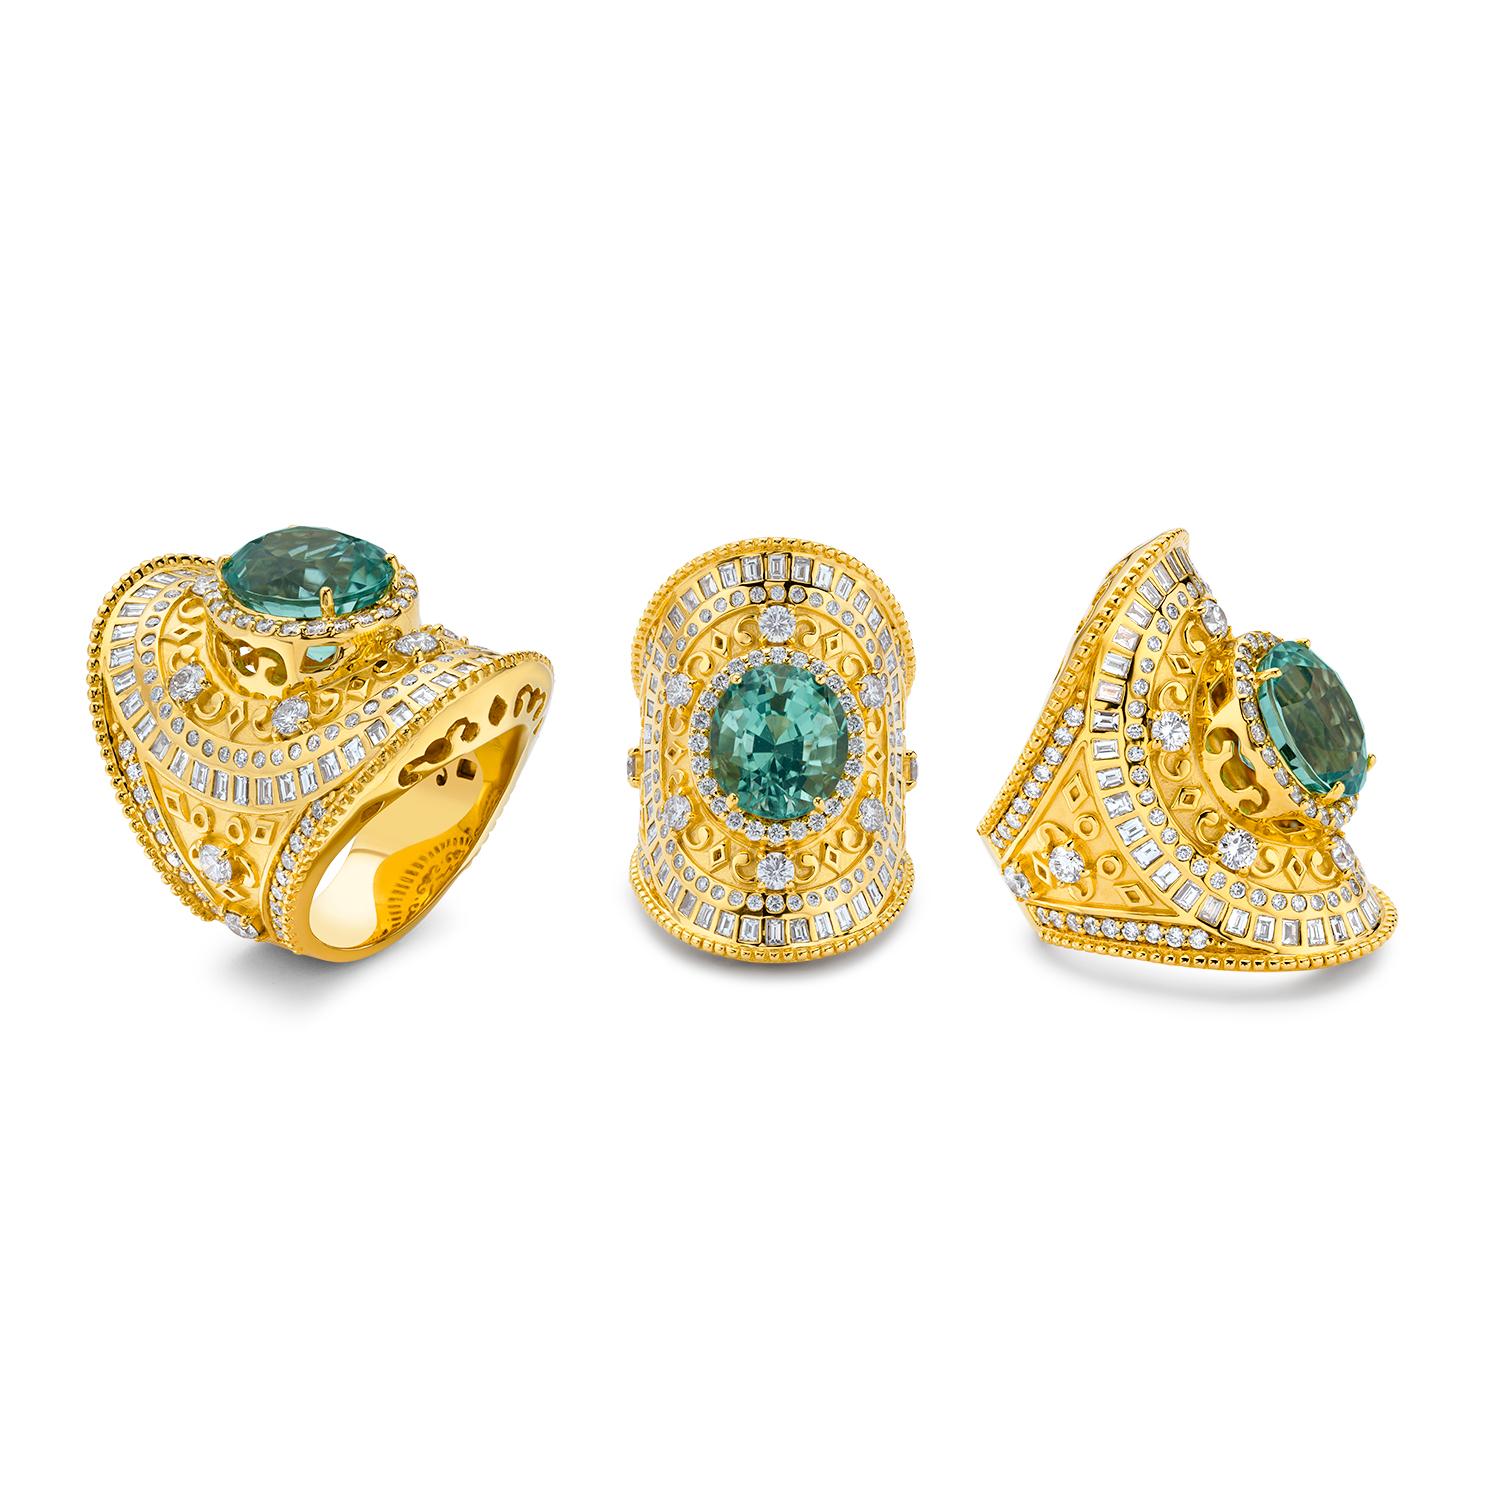 Brilliant Cut 20K Green Tourmaline and Diamond Wrap Ring by Buddha Mama For Sale